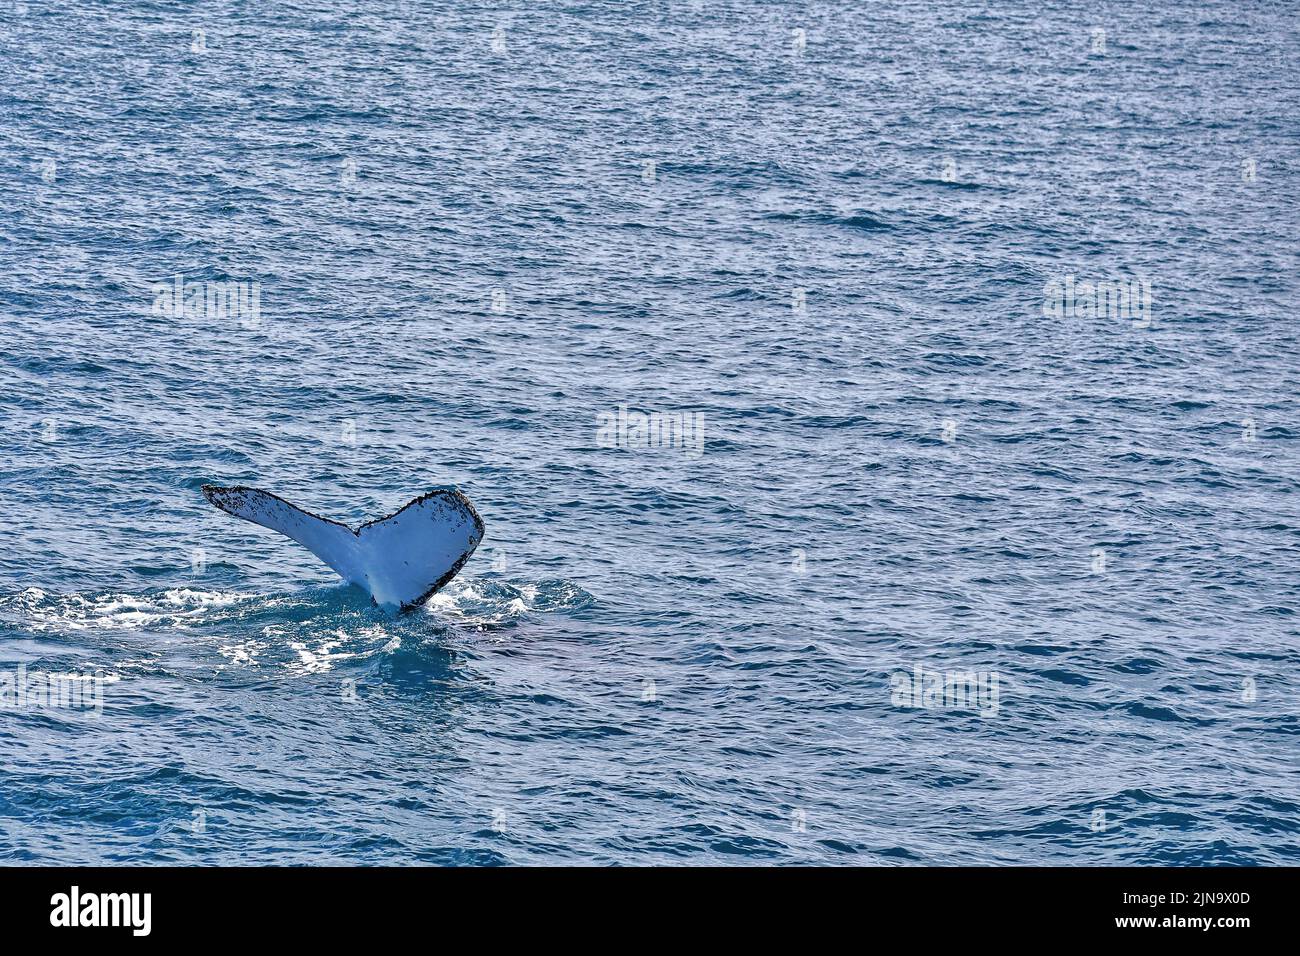 126 Southern humpback whale-Megaptera novaeangliae australis lobtailing in Moreton Bay. Brisbane-Australia. Stock Photo